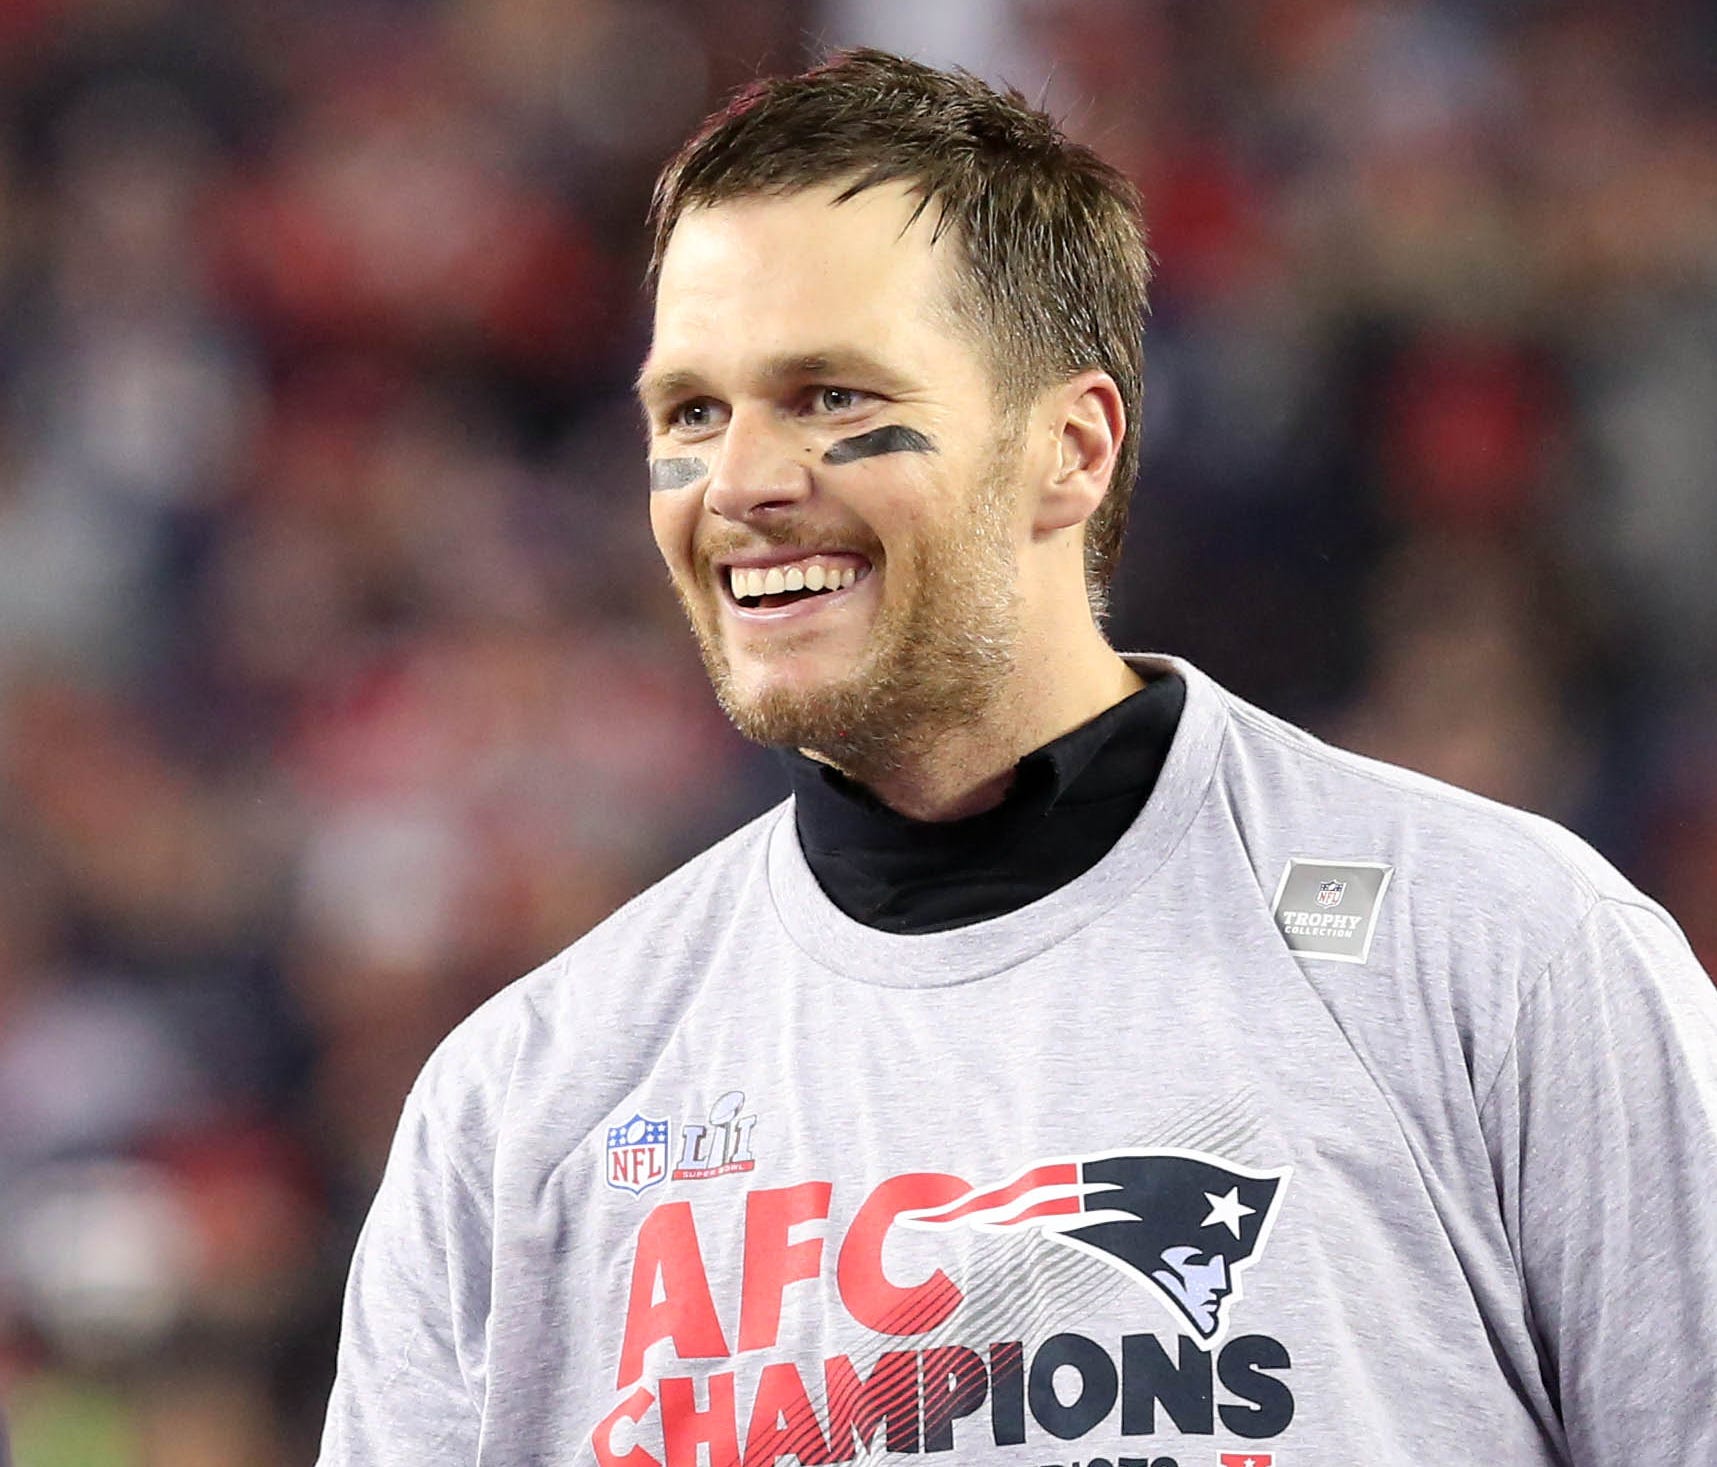 New England Patriots quarterback Tom Brady is heading to his record seventh Super Bowl.